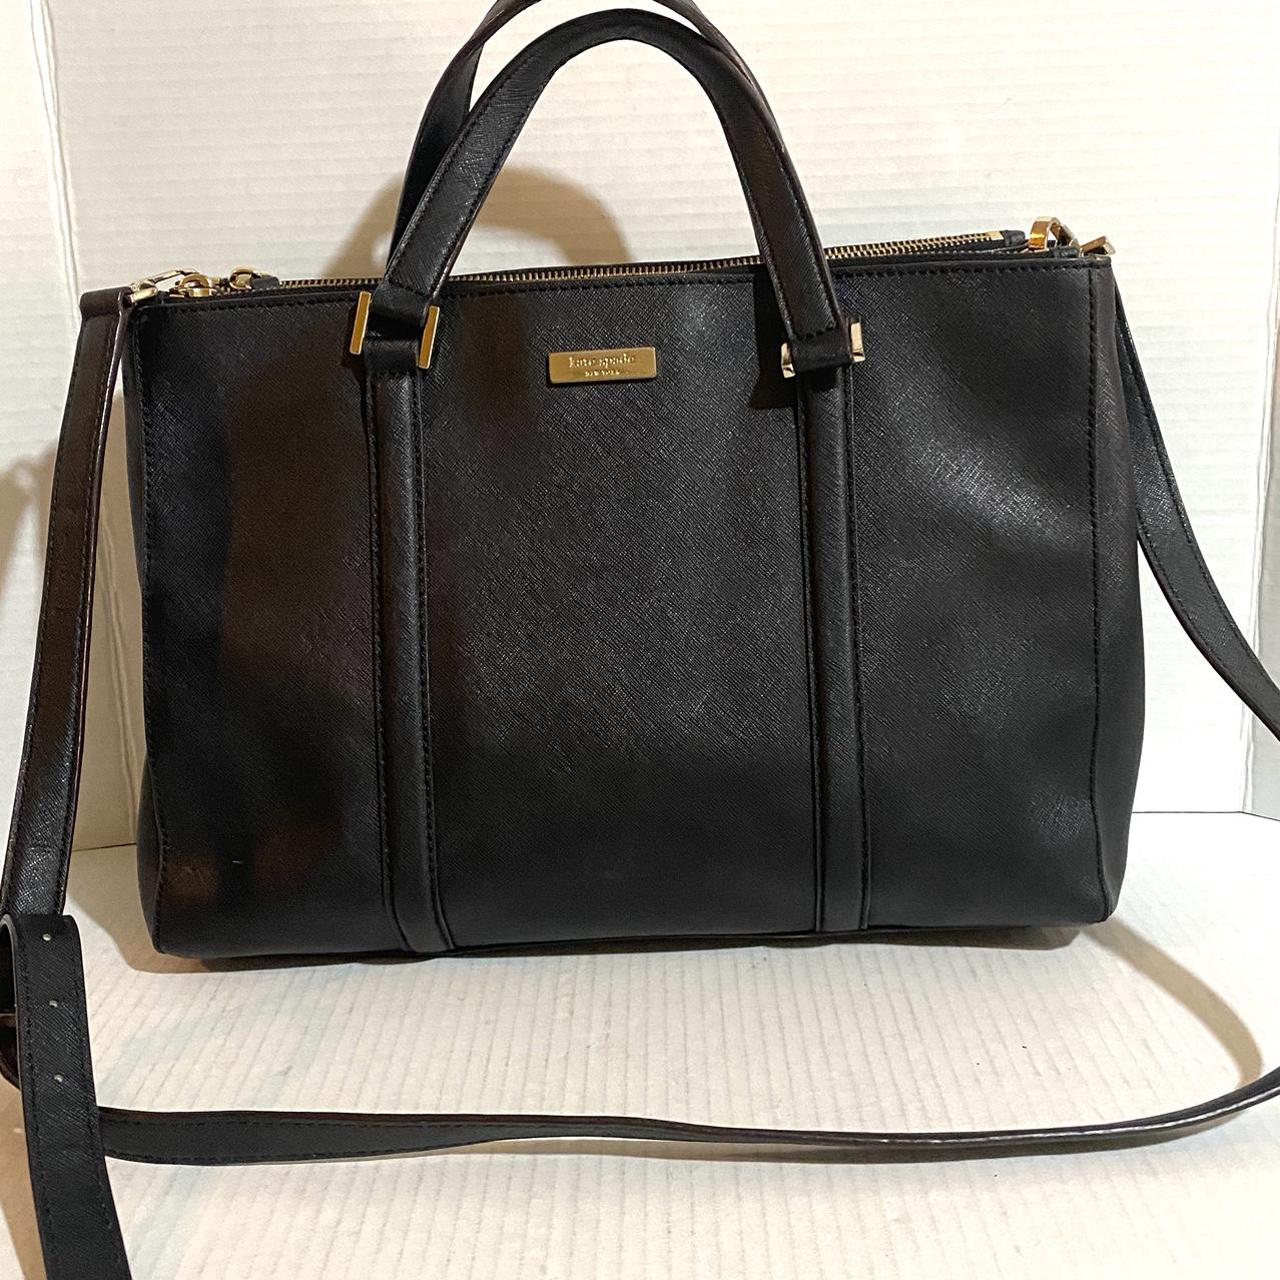 Kate Spade Saffiano Leather Satchel Bag